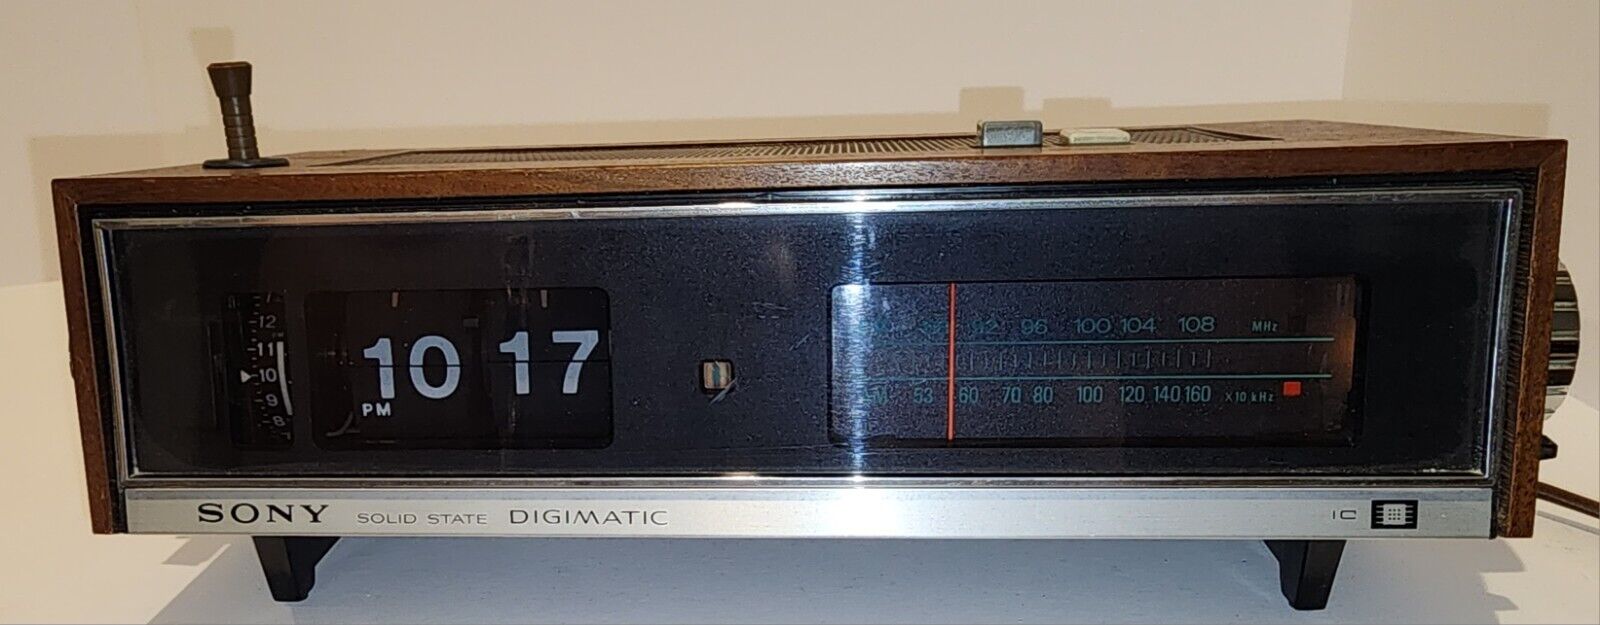 Sony ICF-C670W Digimatic AM FM Flip Clock radio Vintage Read Description.